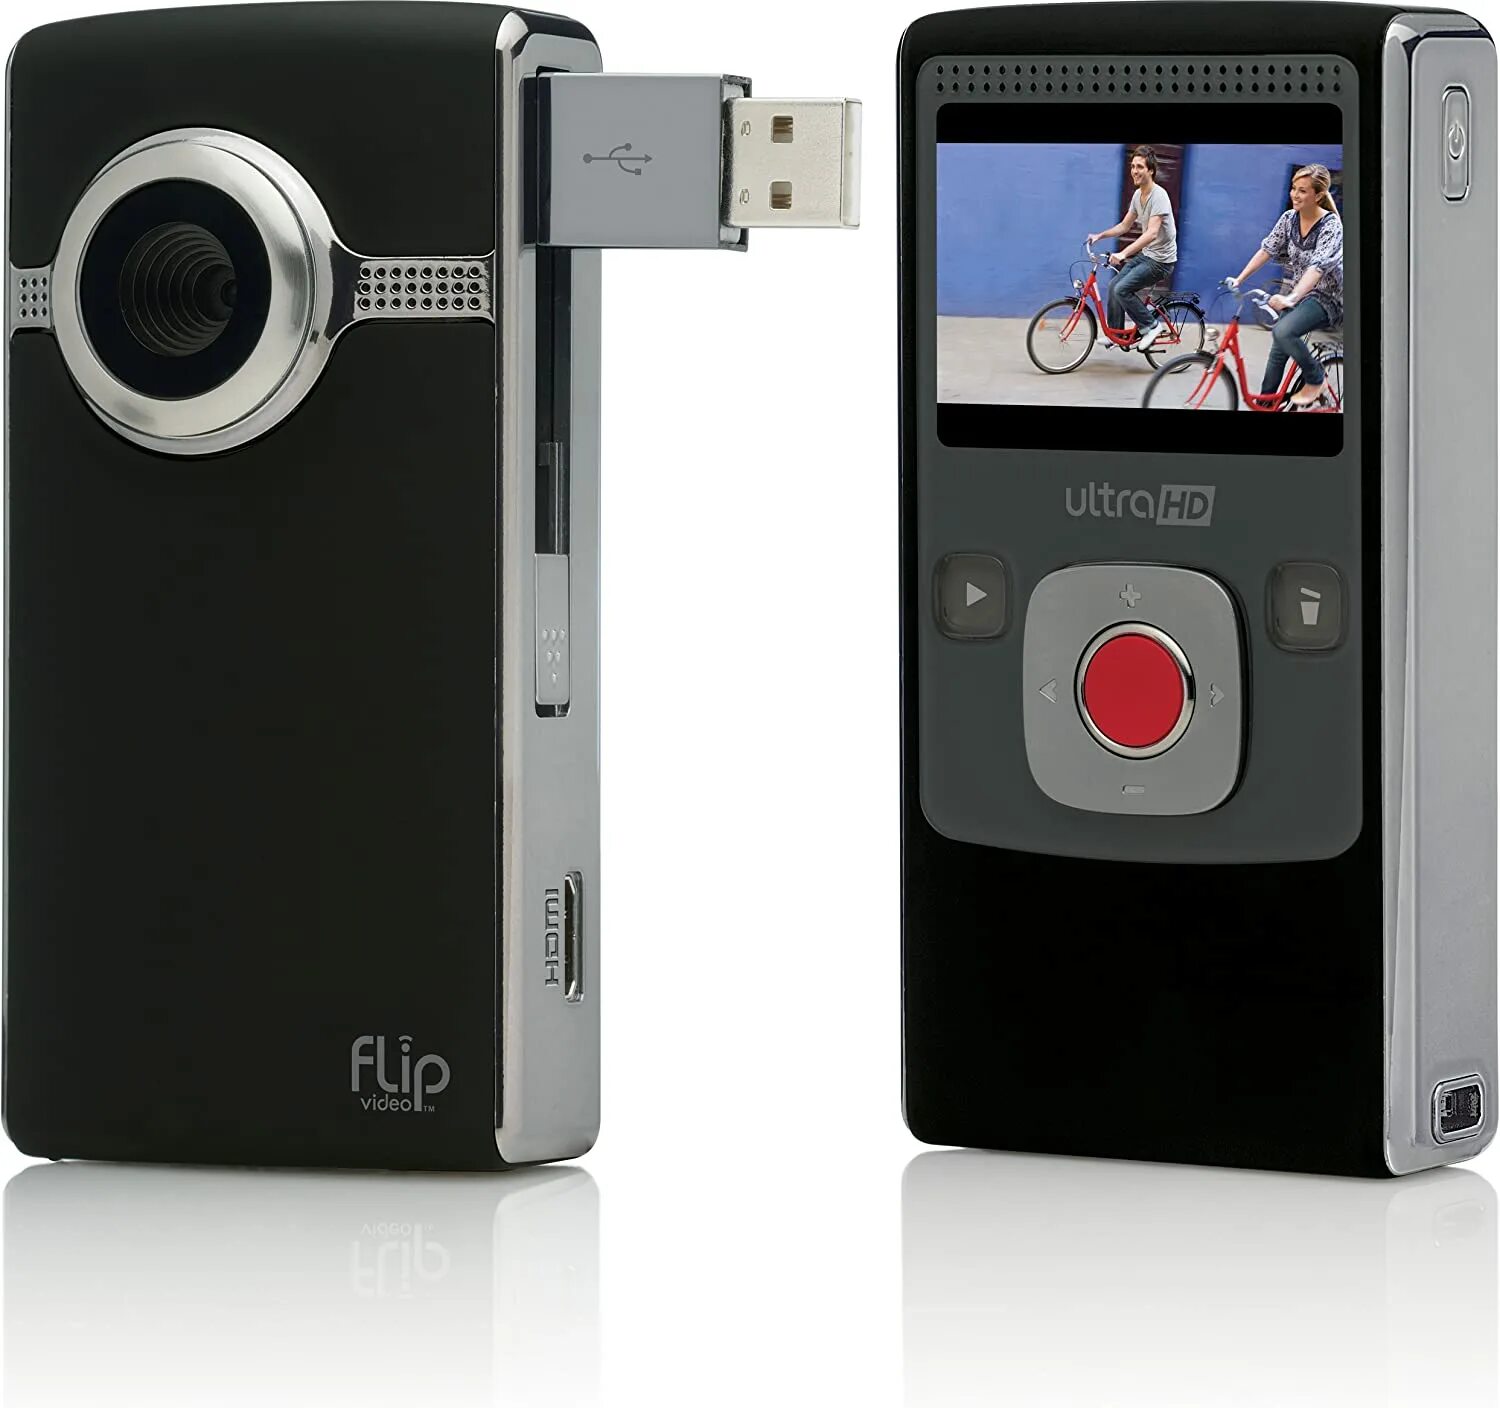 Flip камера. Флип камера. Flip Ultra камера. Видеокамера Flip Video f230. Флип камера 6ольф 5 задняя кнопка.